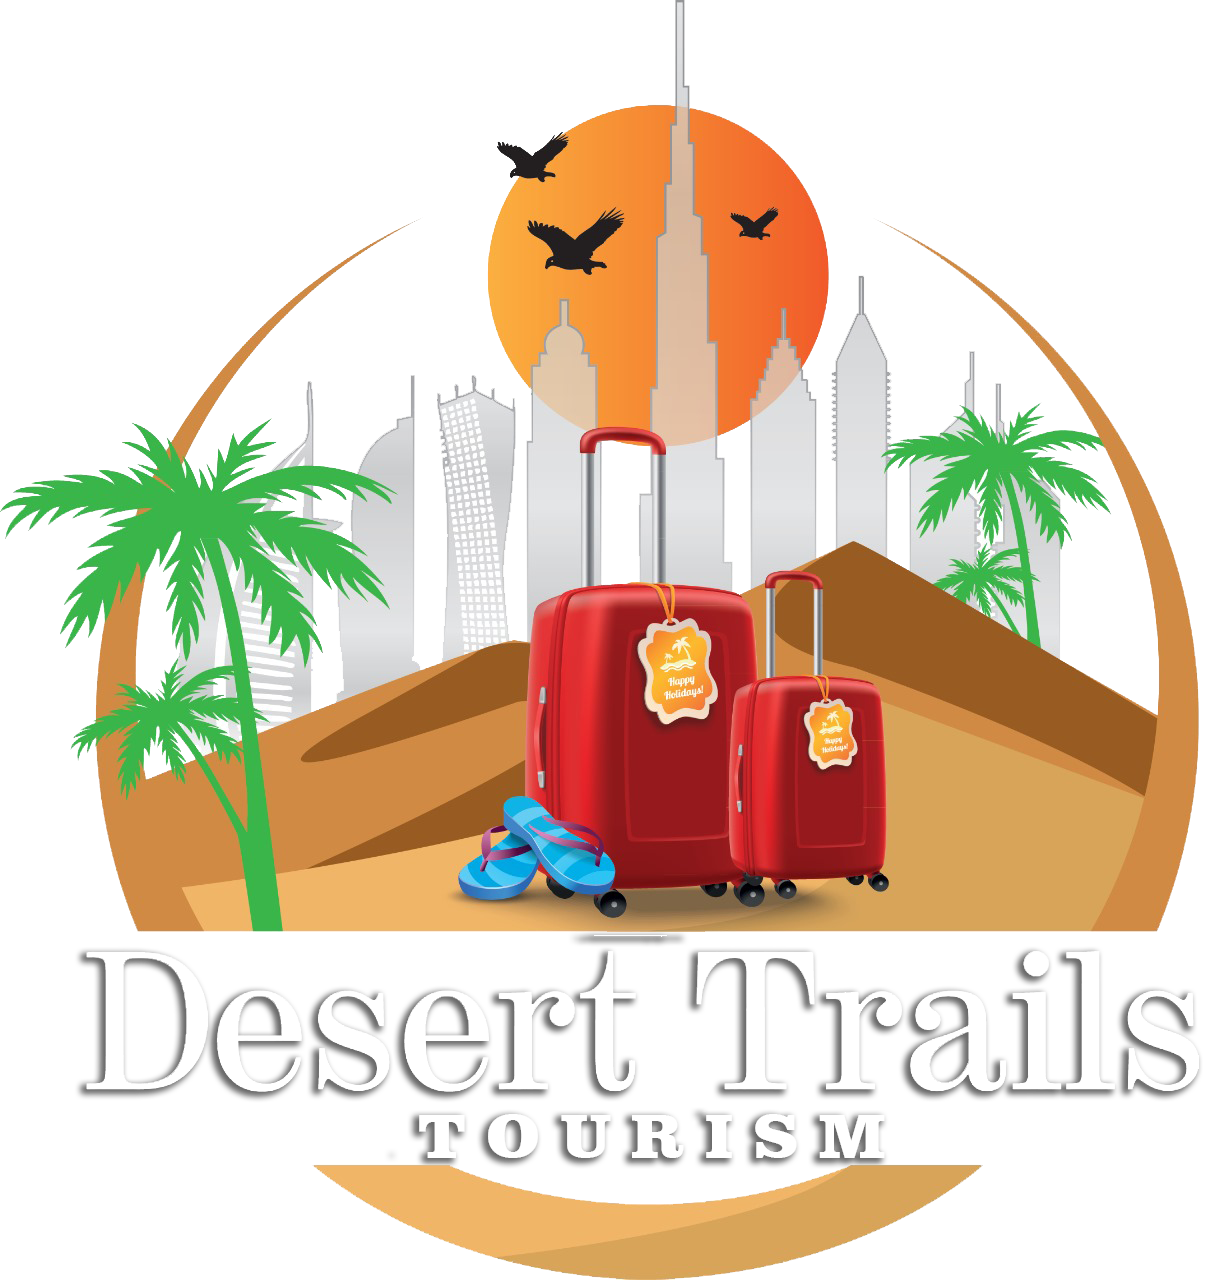 Desert Trails Tourism